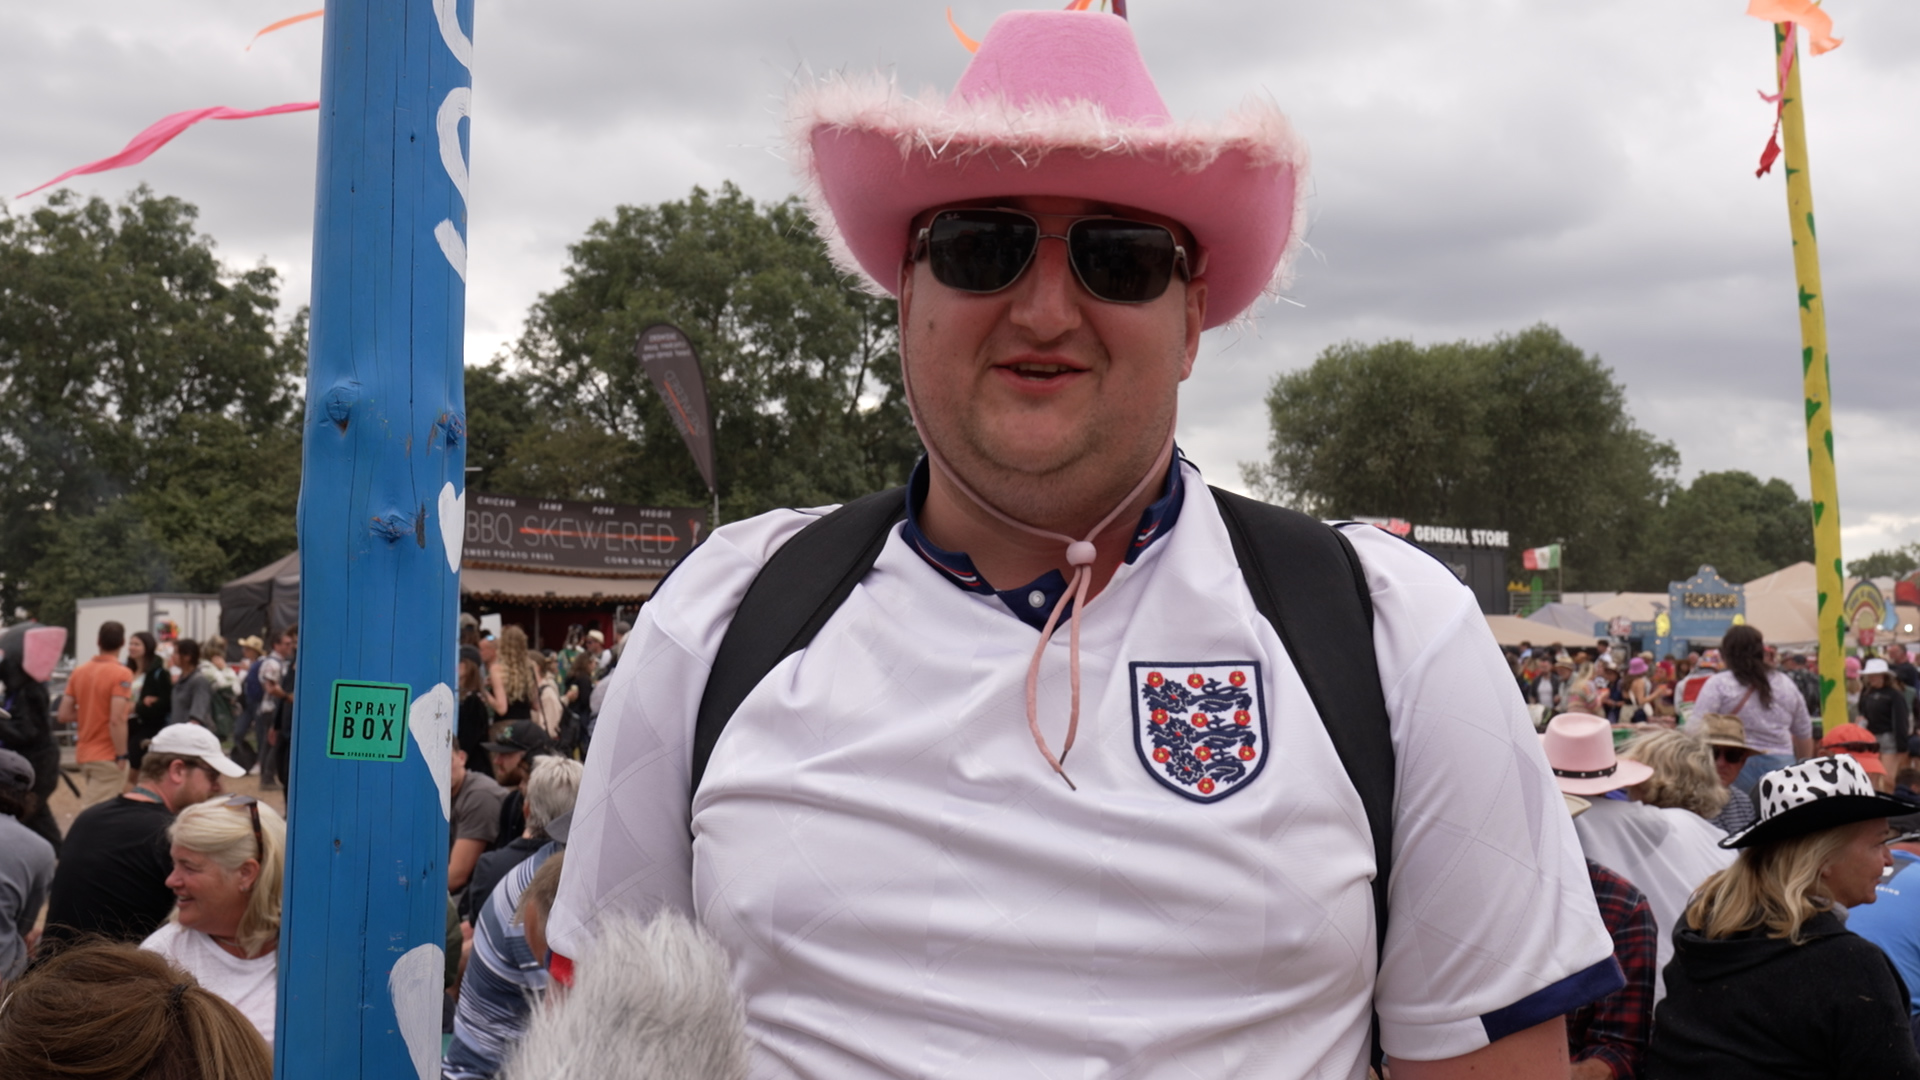 Richard Perrott wearing a white England football shirt and a pink cowboy hat